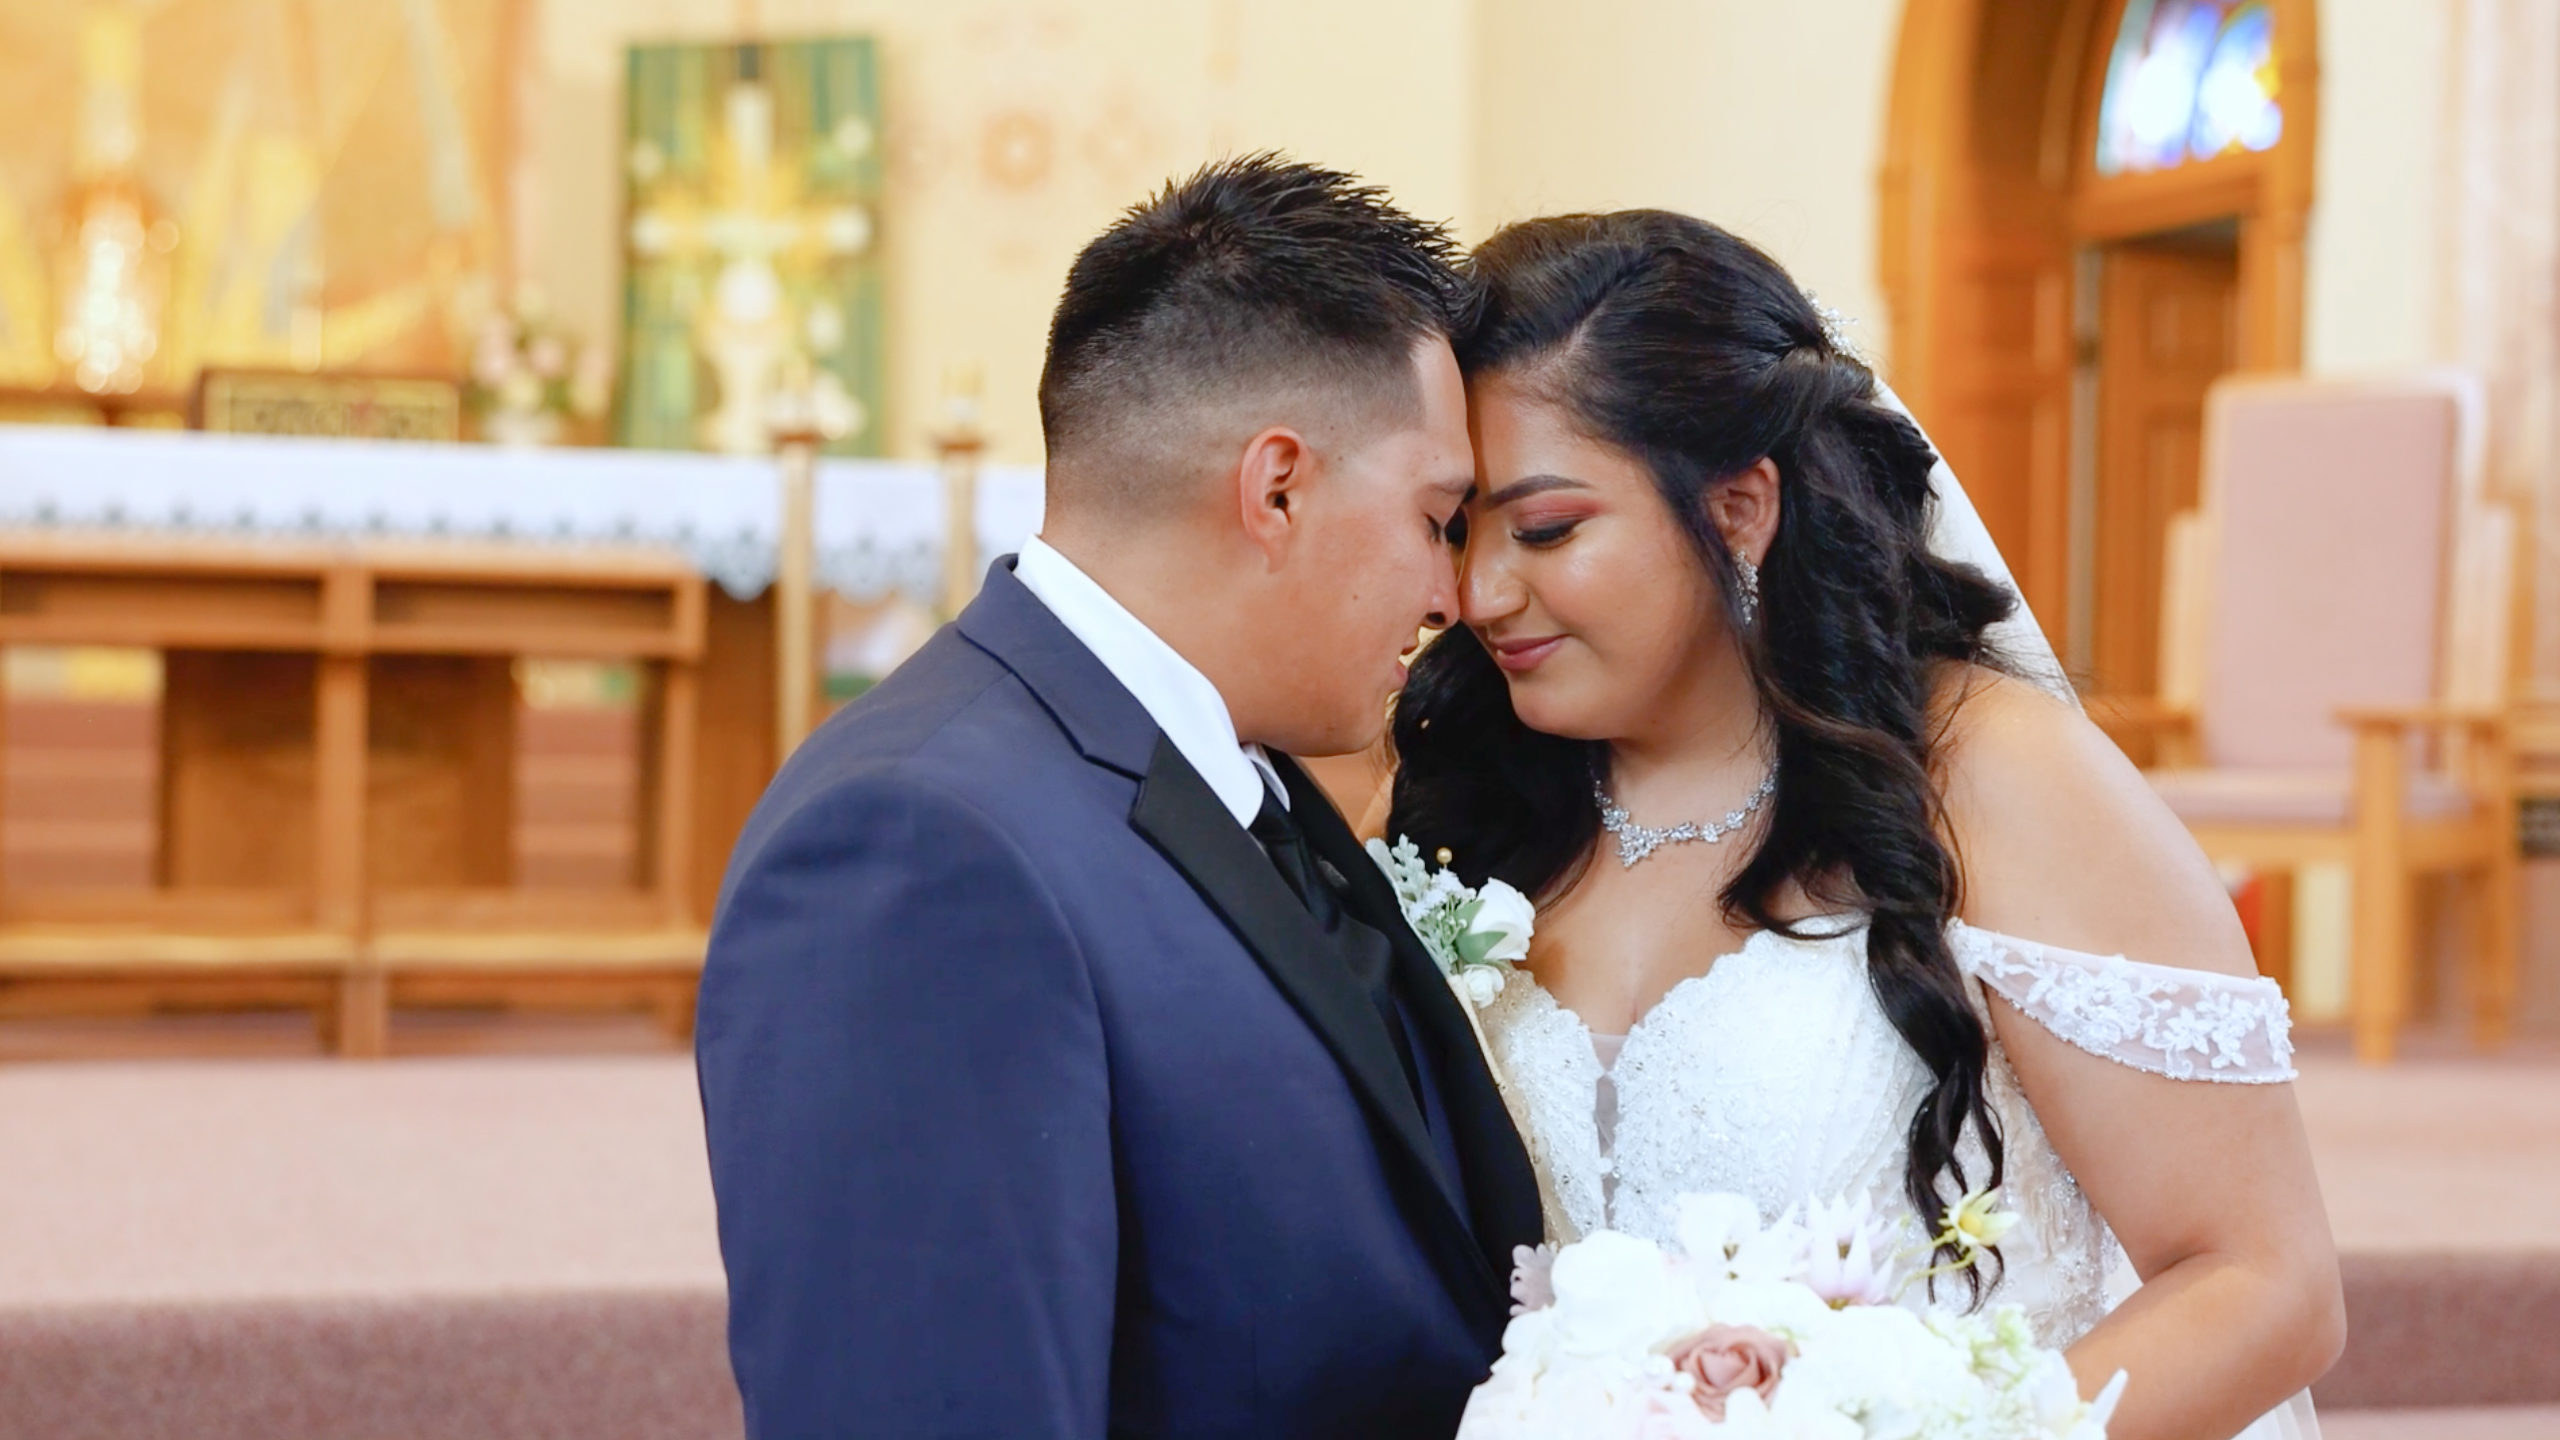 Valeria & Ricardo | A traditional Hispanic wedding in Logansport ...